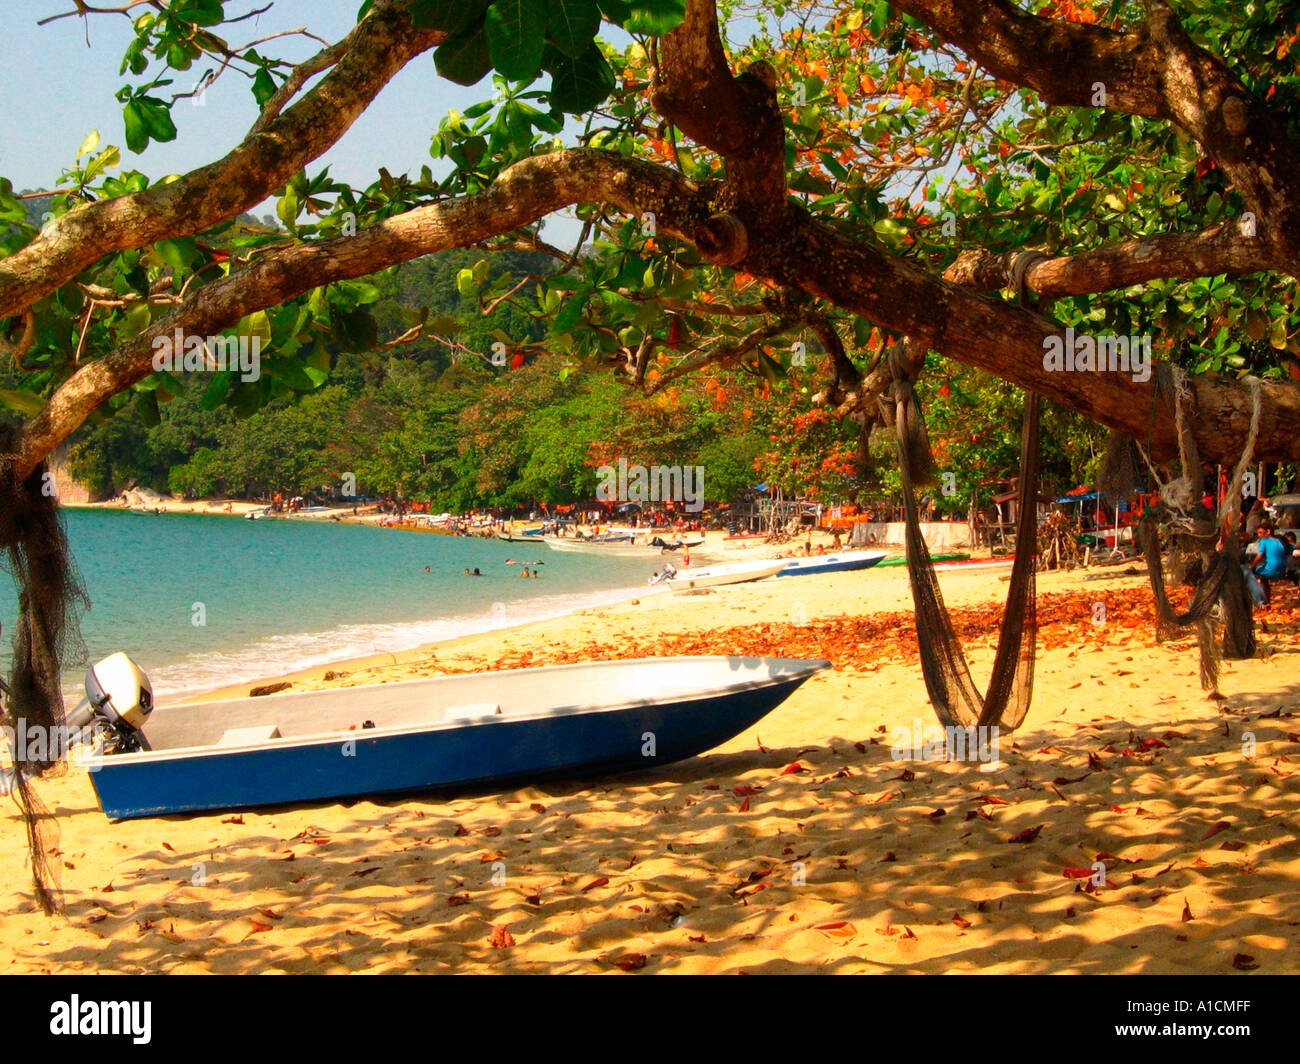 Teluk Nipah beach Pulau Pangkor island Malaysia Stock Photo